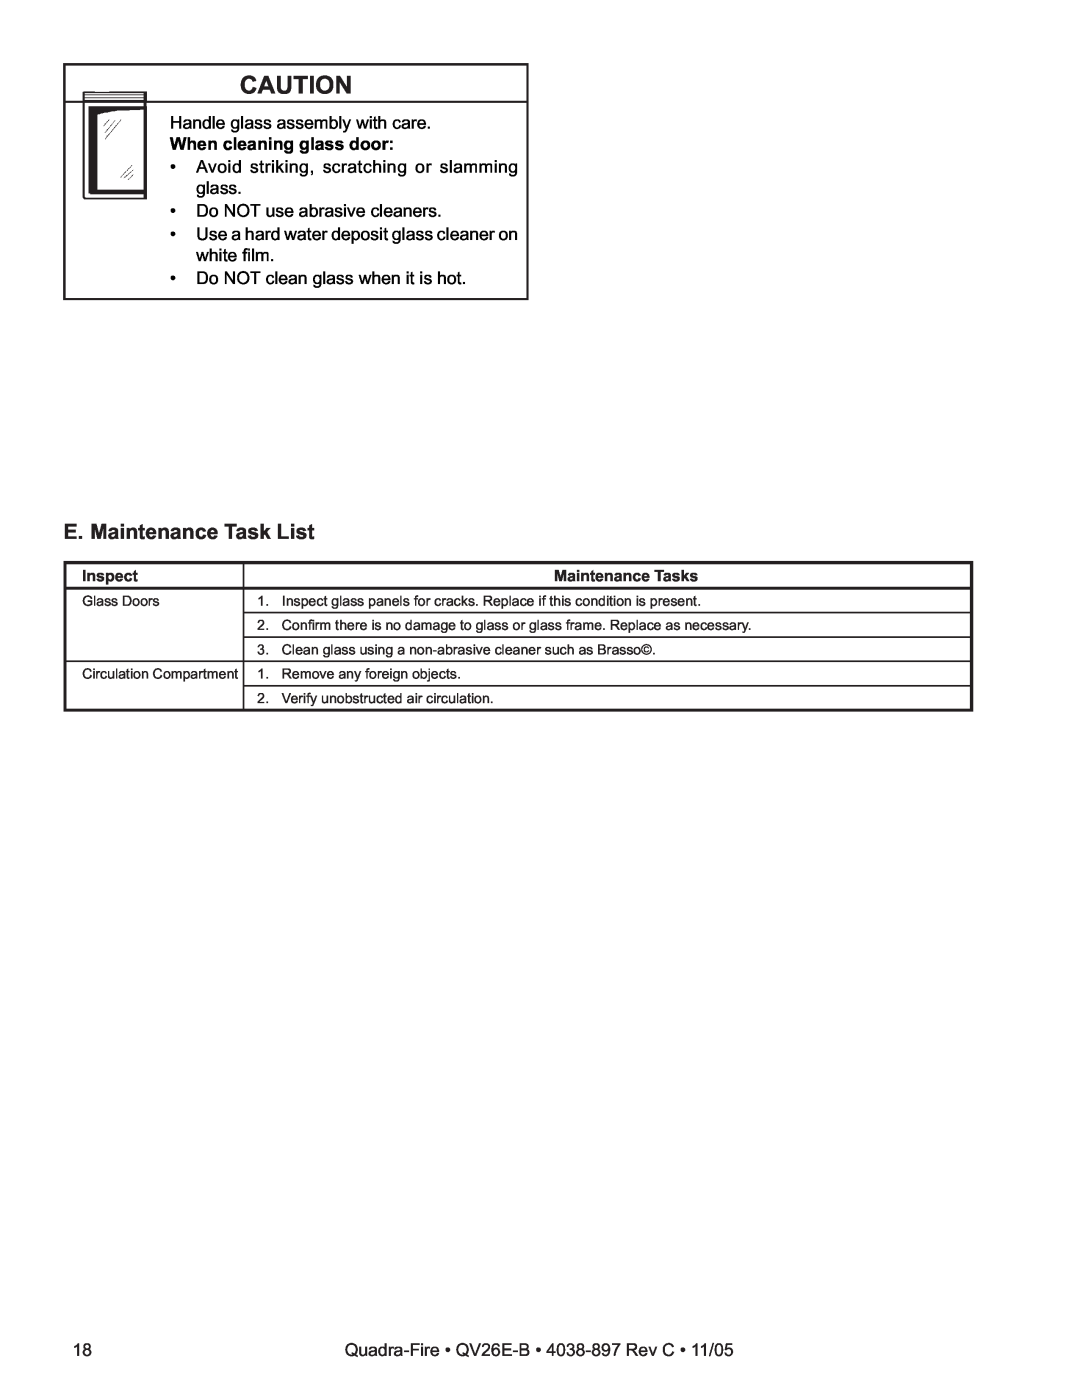 Quadra-Fire QV26E-B owner manual E. Maintenance Task List, When cleaning glass door 